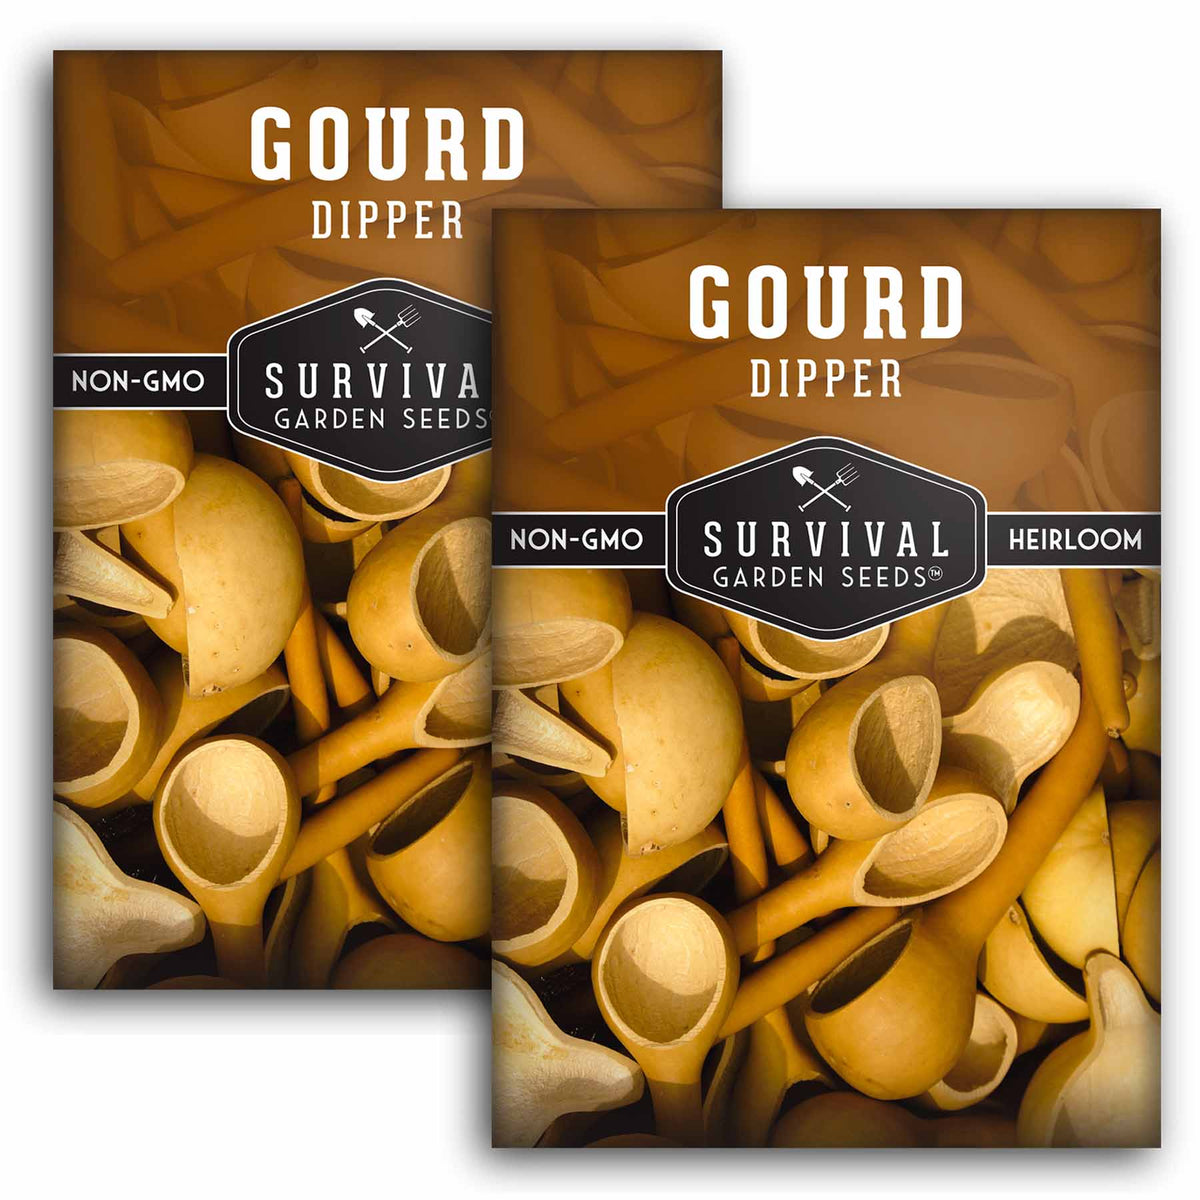 2 packets of Dipper Gourd seeds